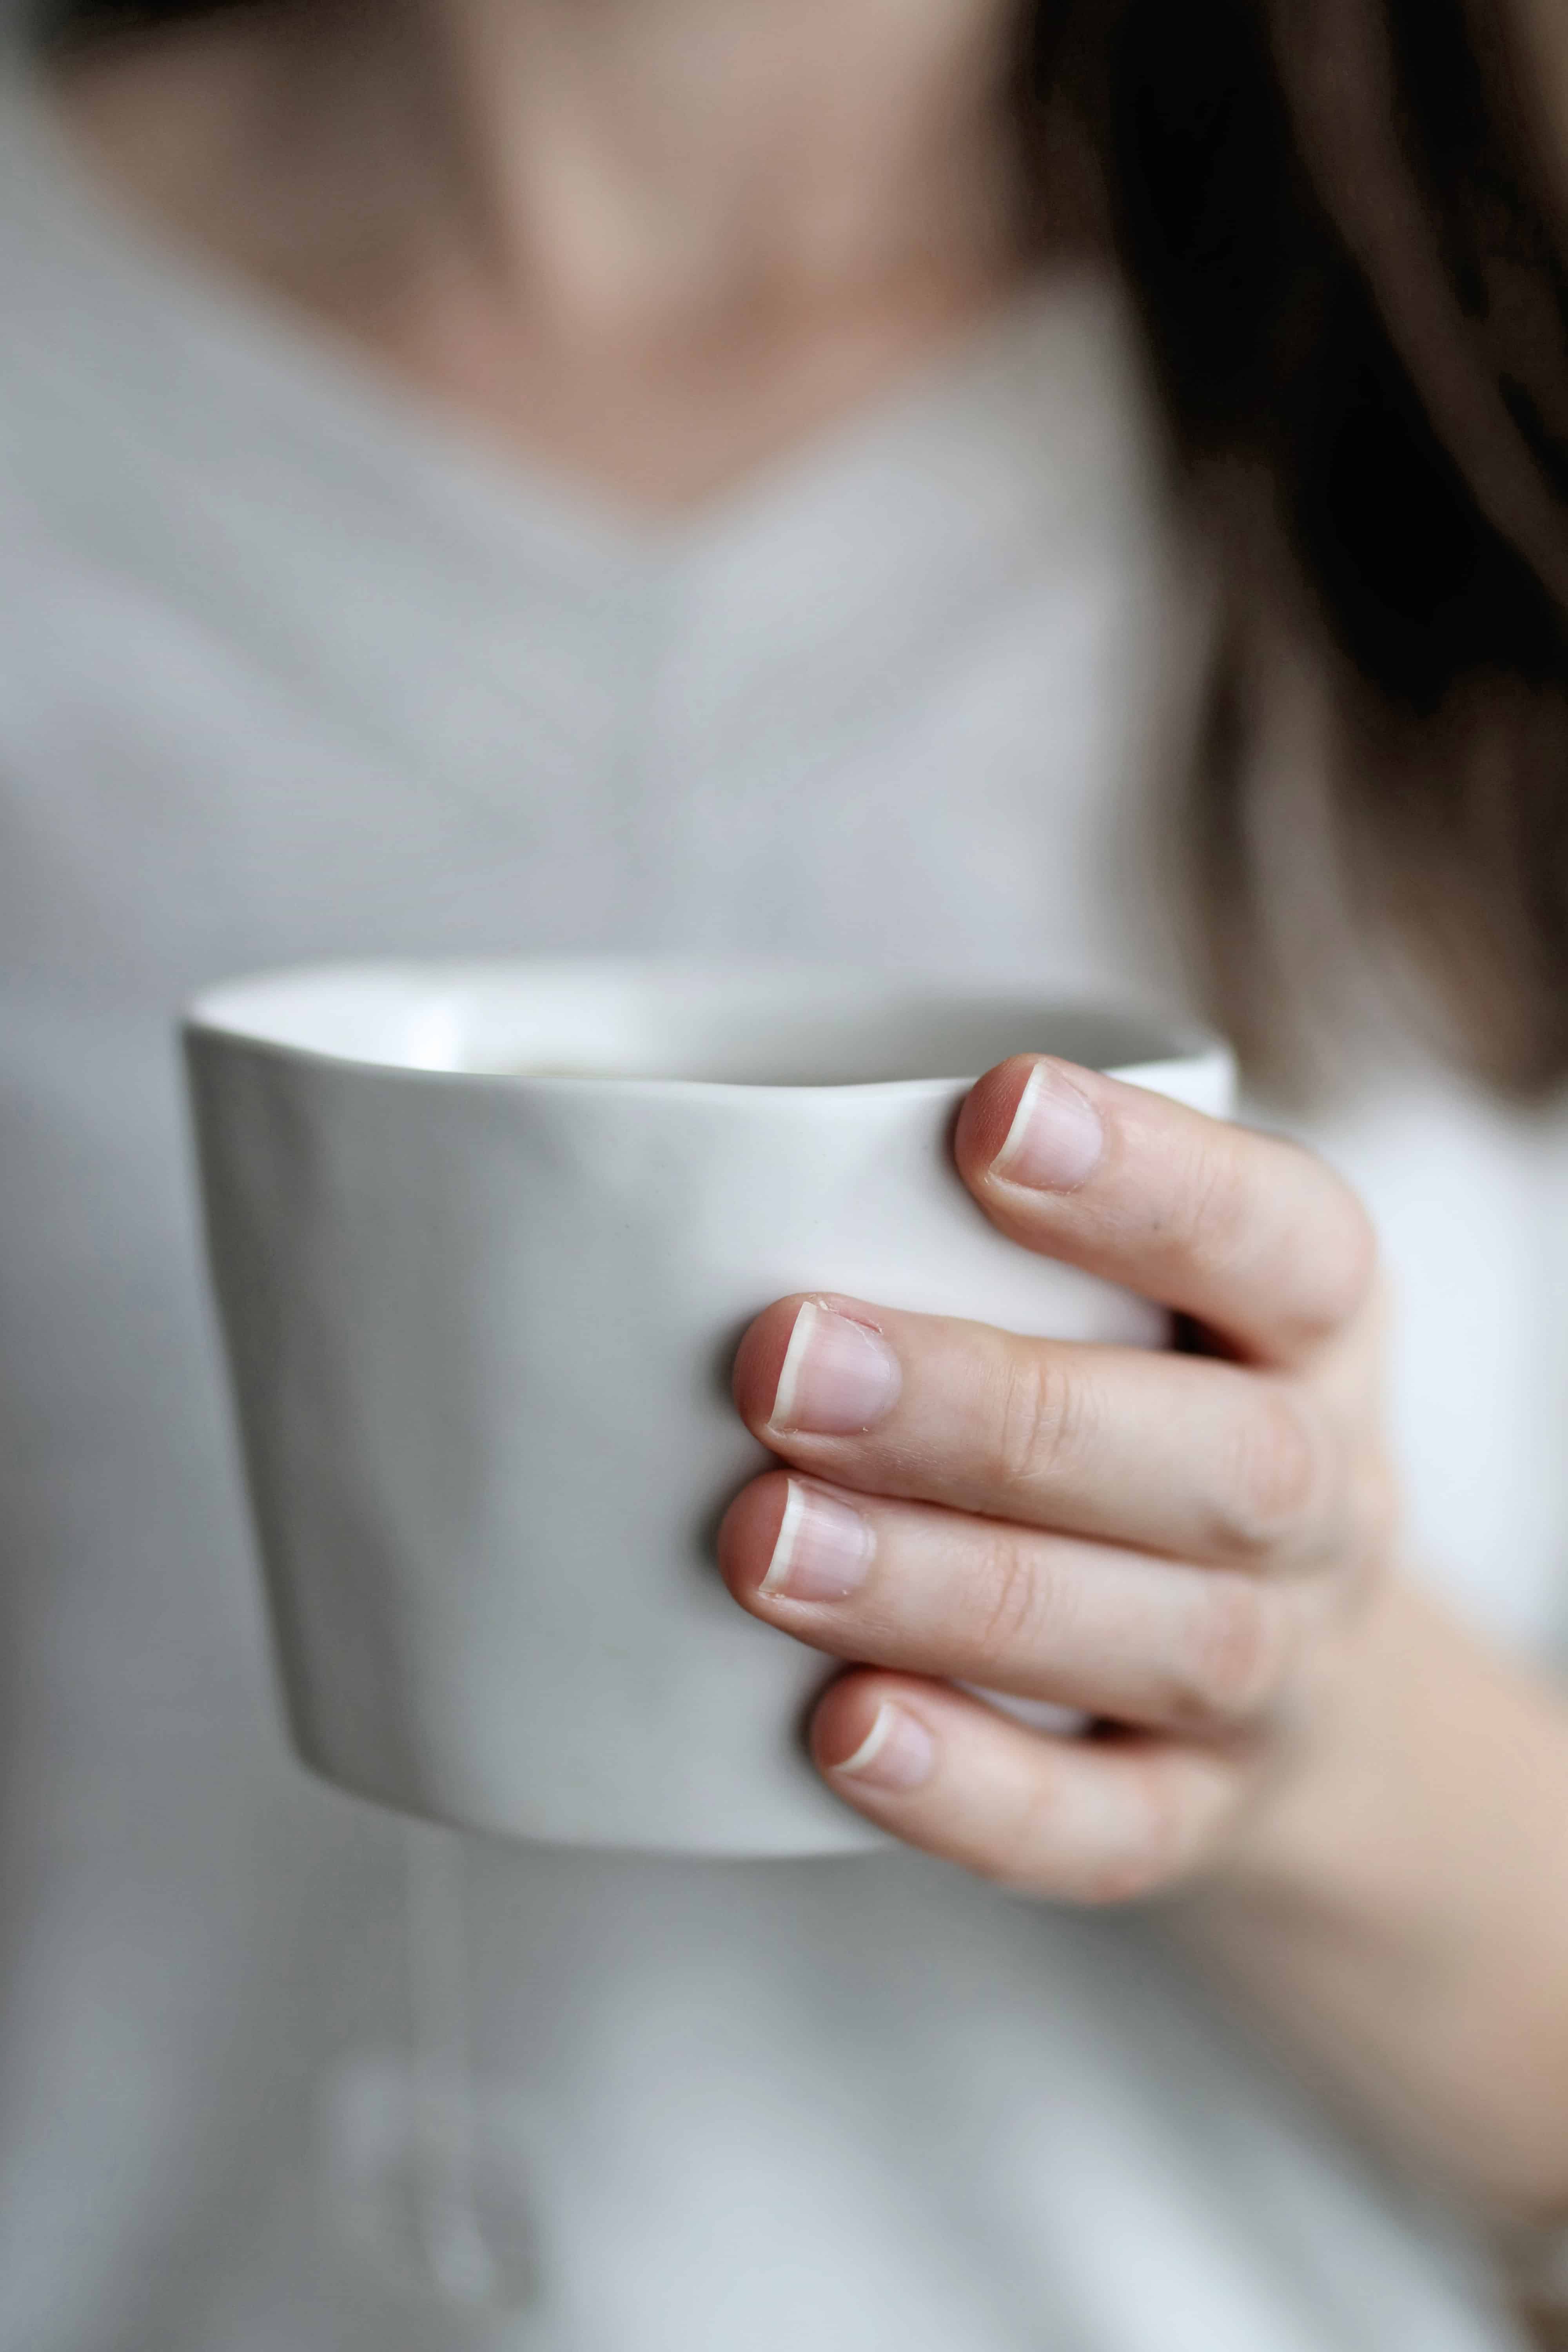 Replace sugar cravings with a mug of tea